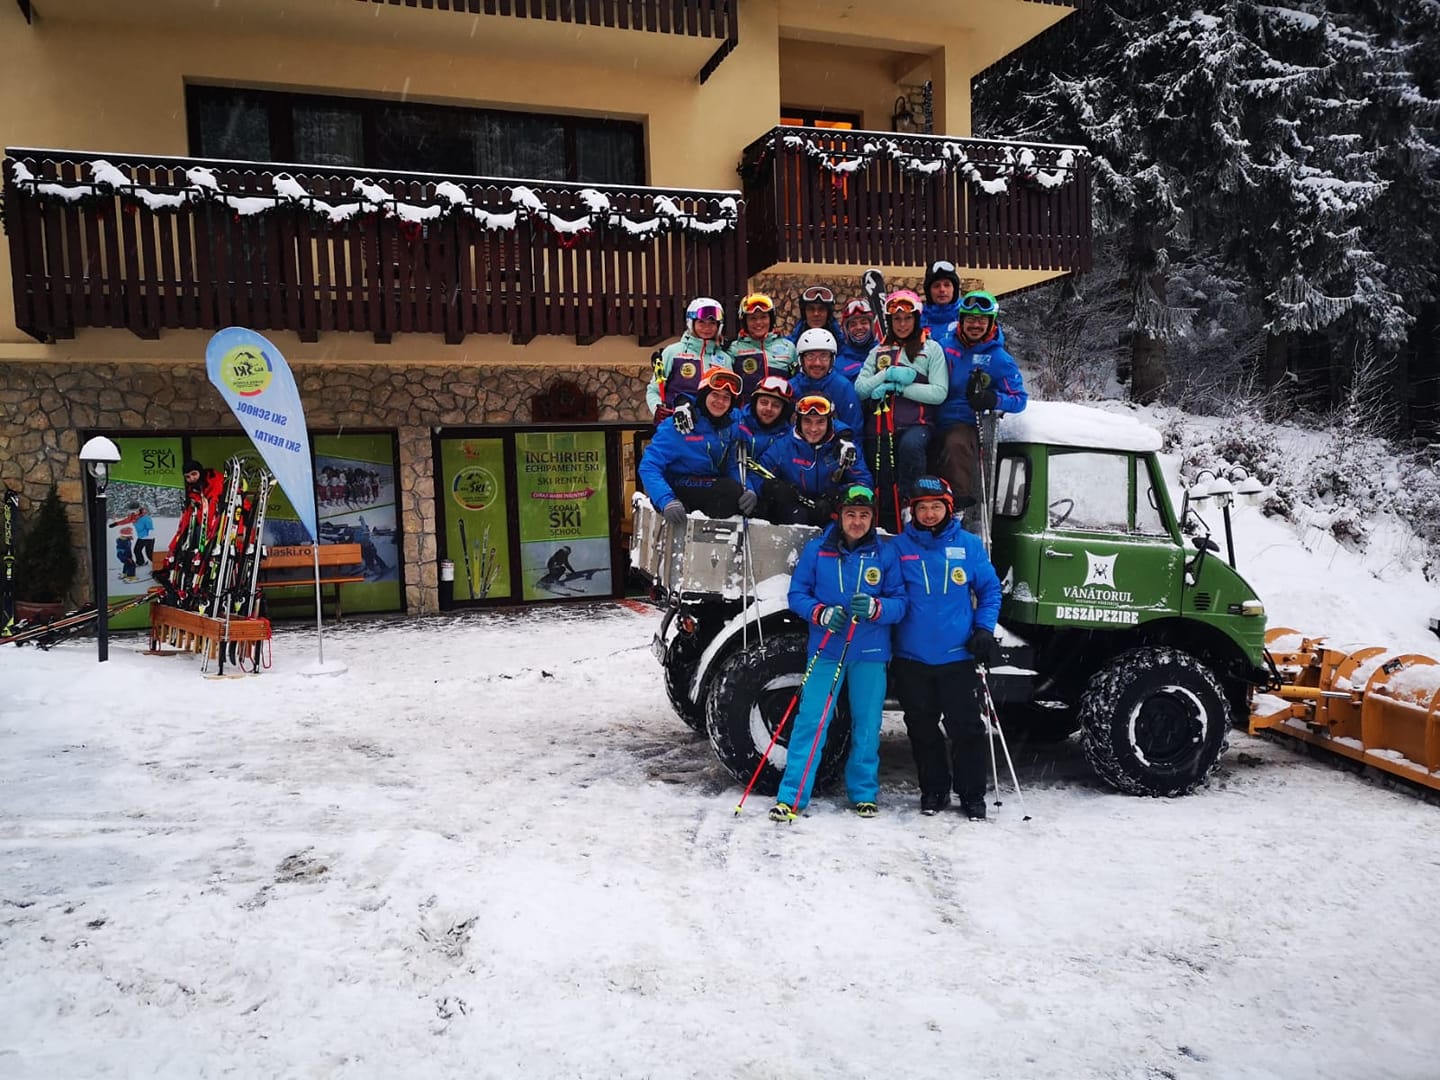 R&J ski & snowboard school &  gear rental in poiana brasov romania